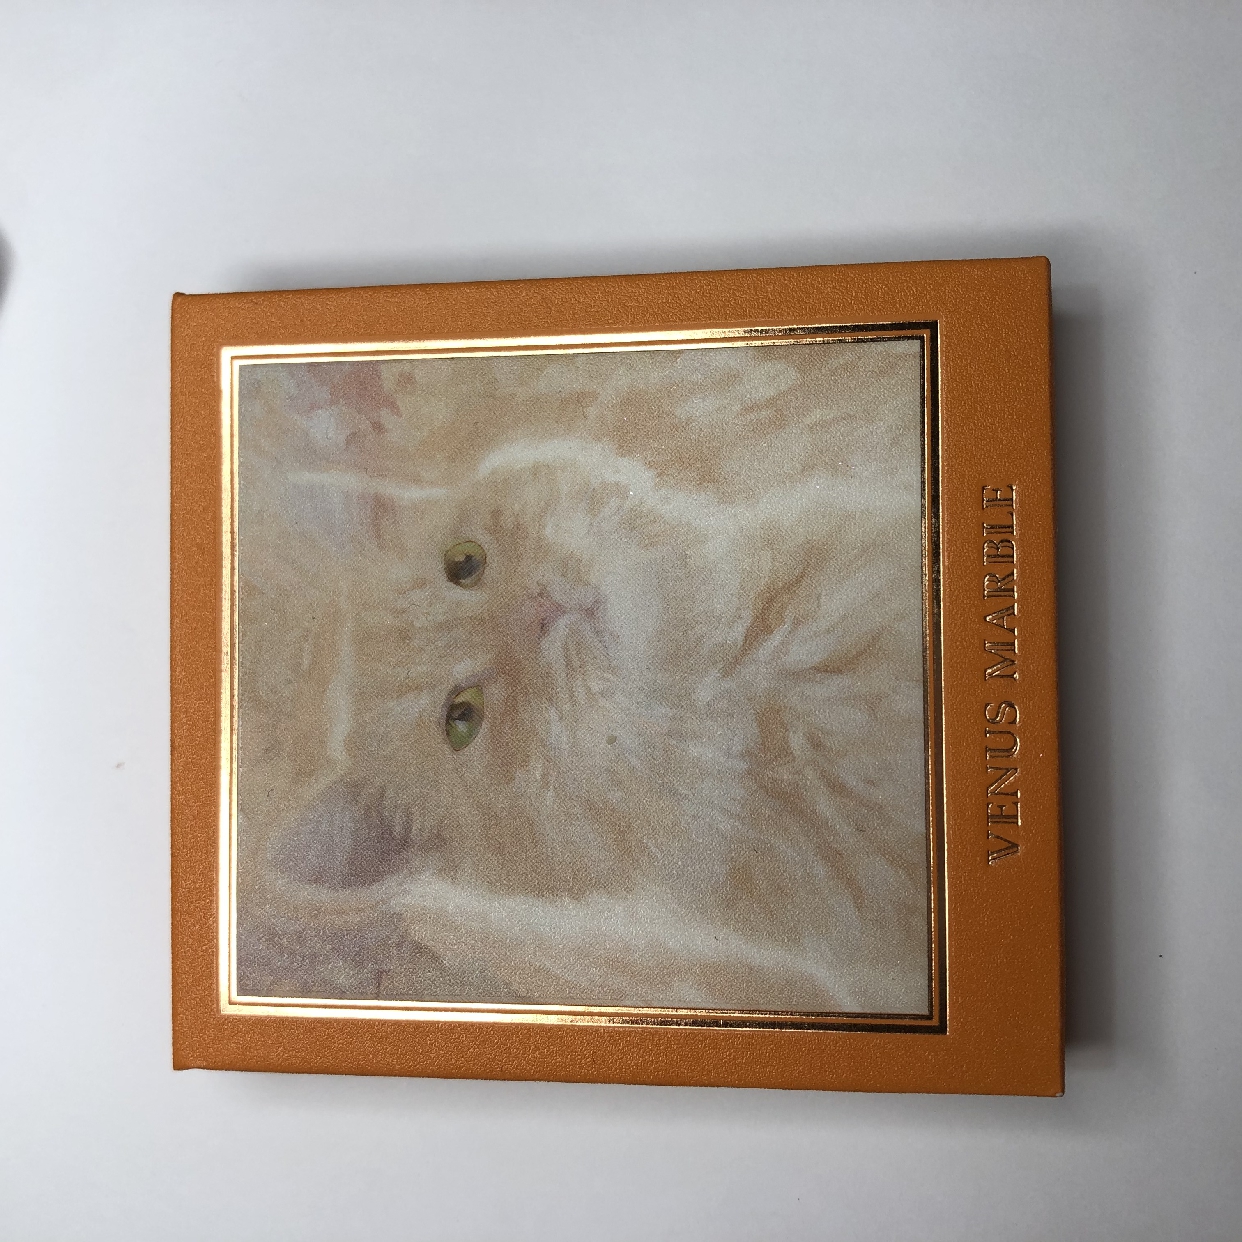 VENUS MARBLE(ヴィーナスマーブル) キャットシリーズアイシャドウパレットを使ったささみさんのクチコミ画像3